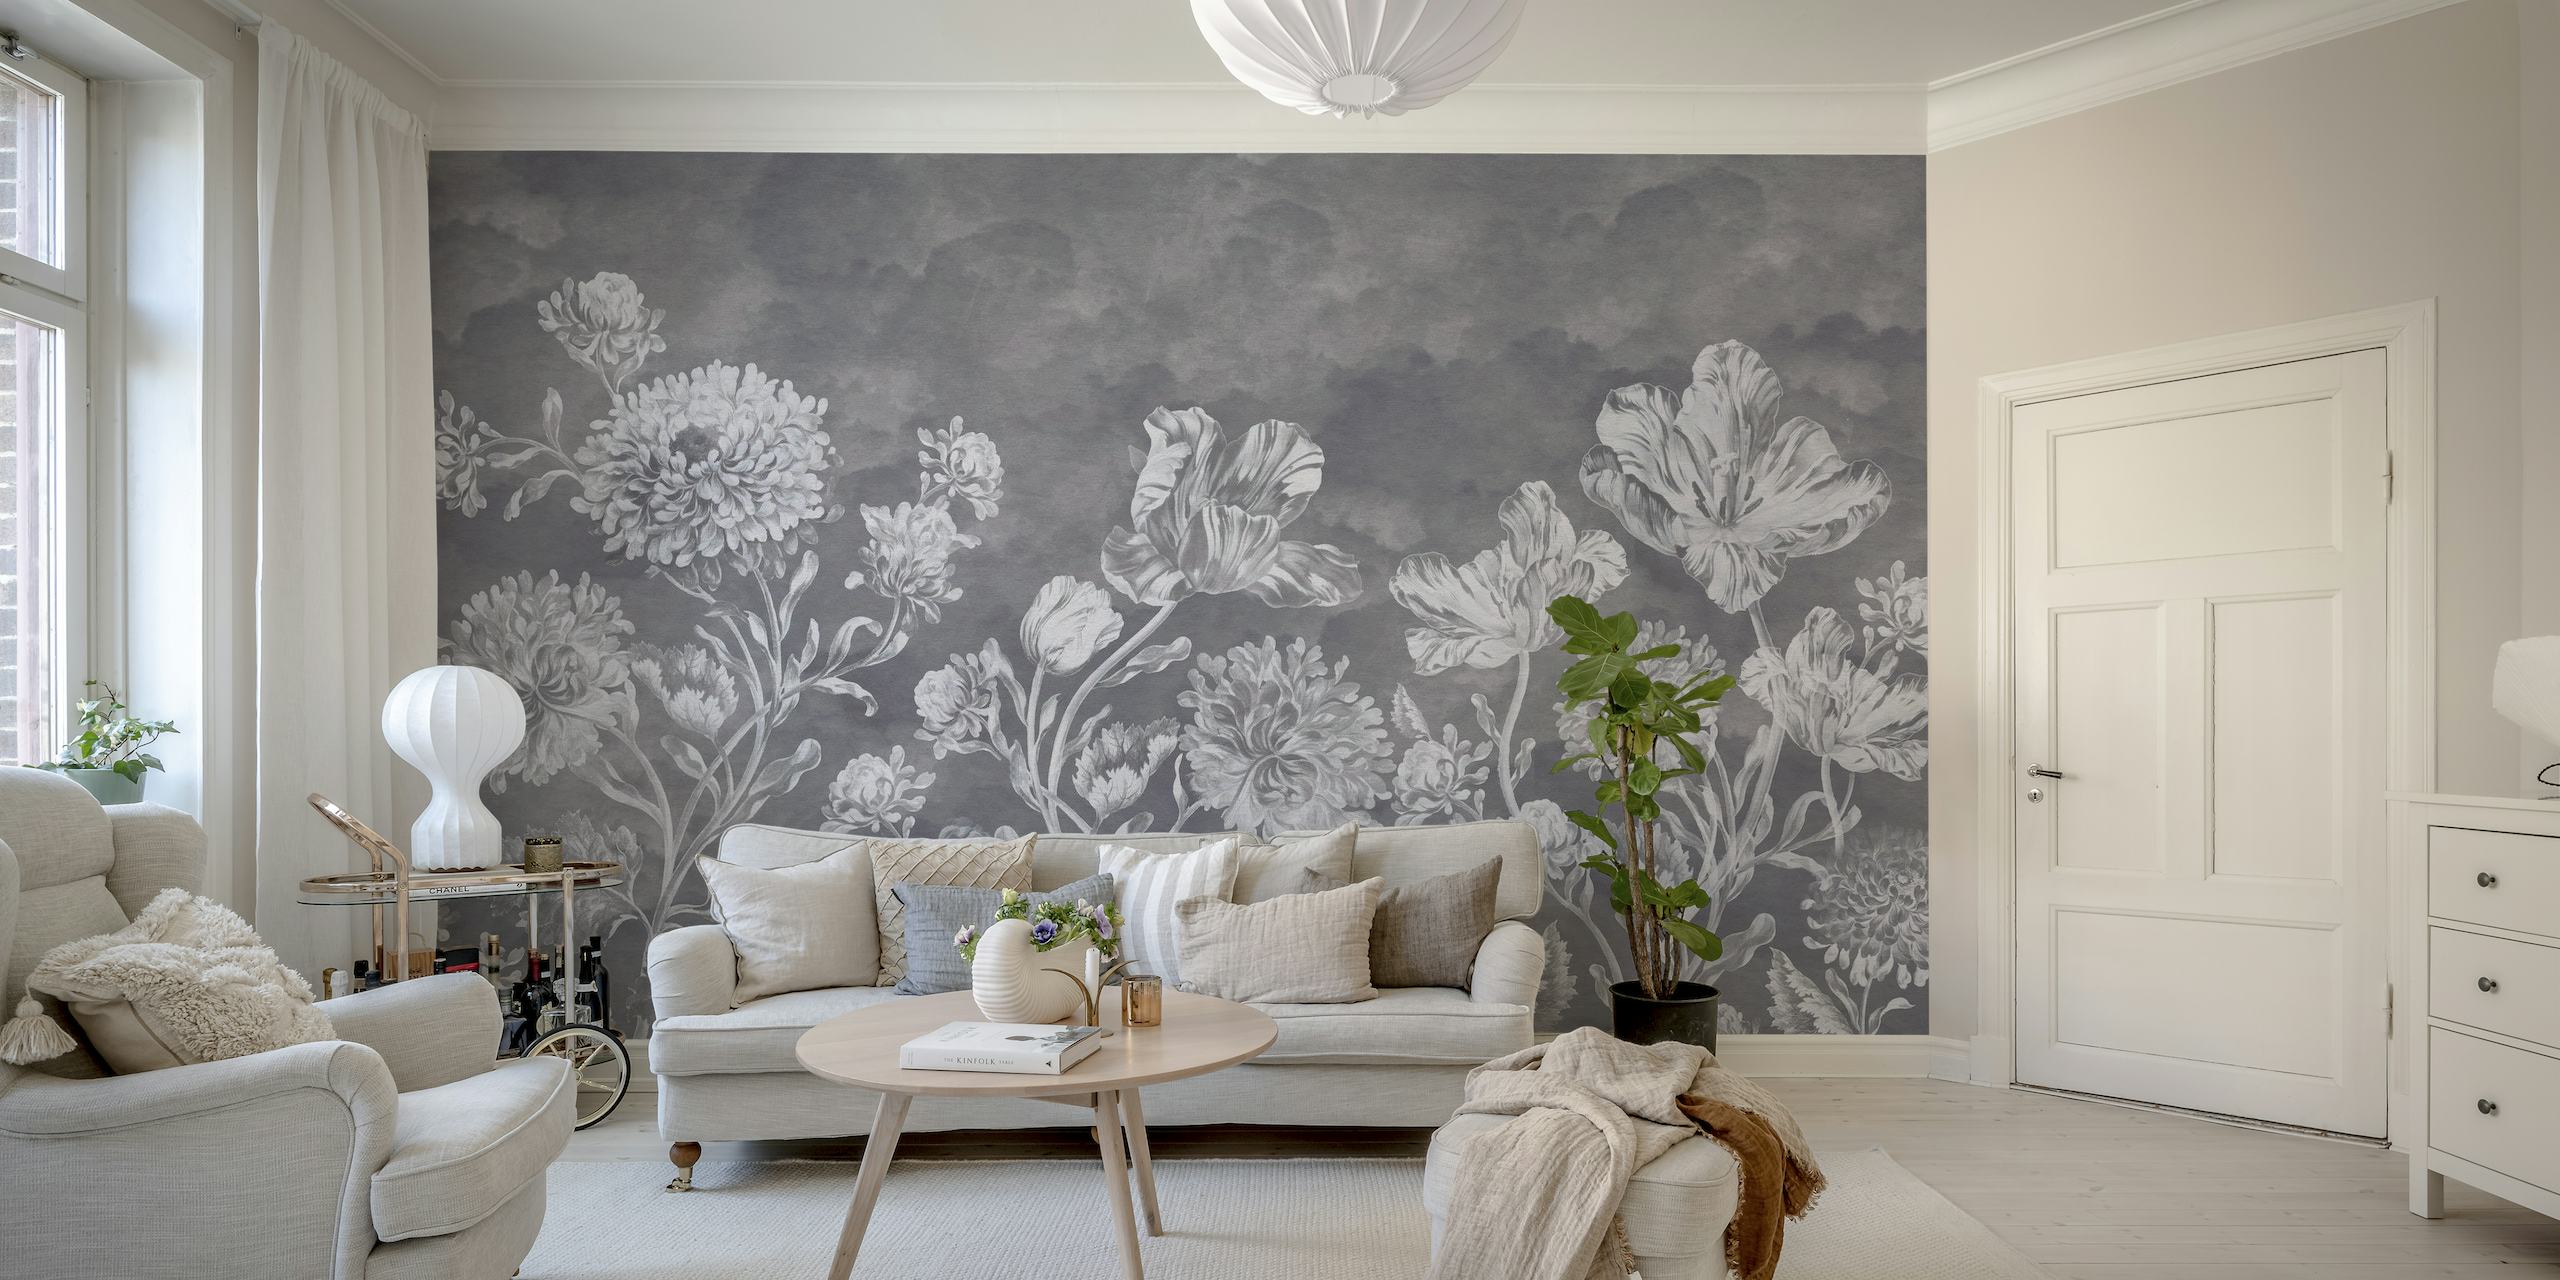 Fotomural vinílico de parede floral estilo barroco escuro temperamental com desenhos de flores intrincados em tons de cinza